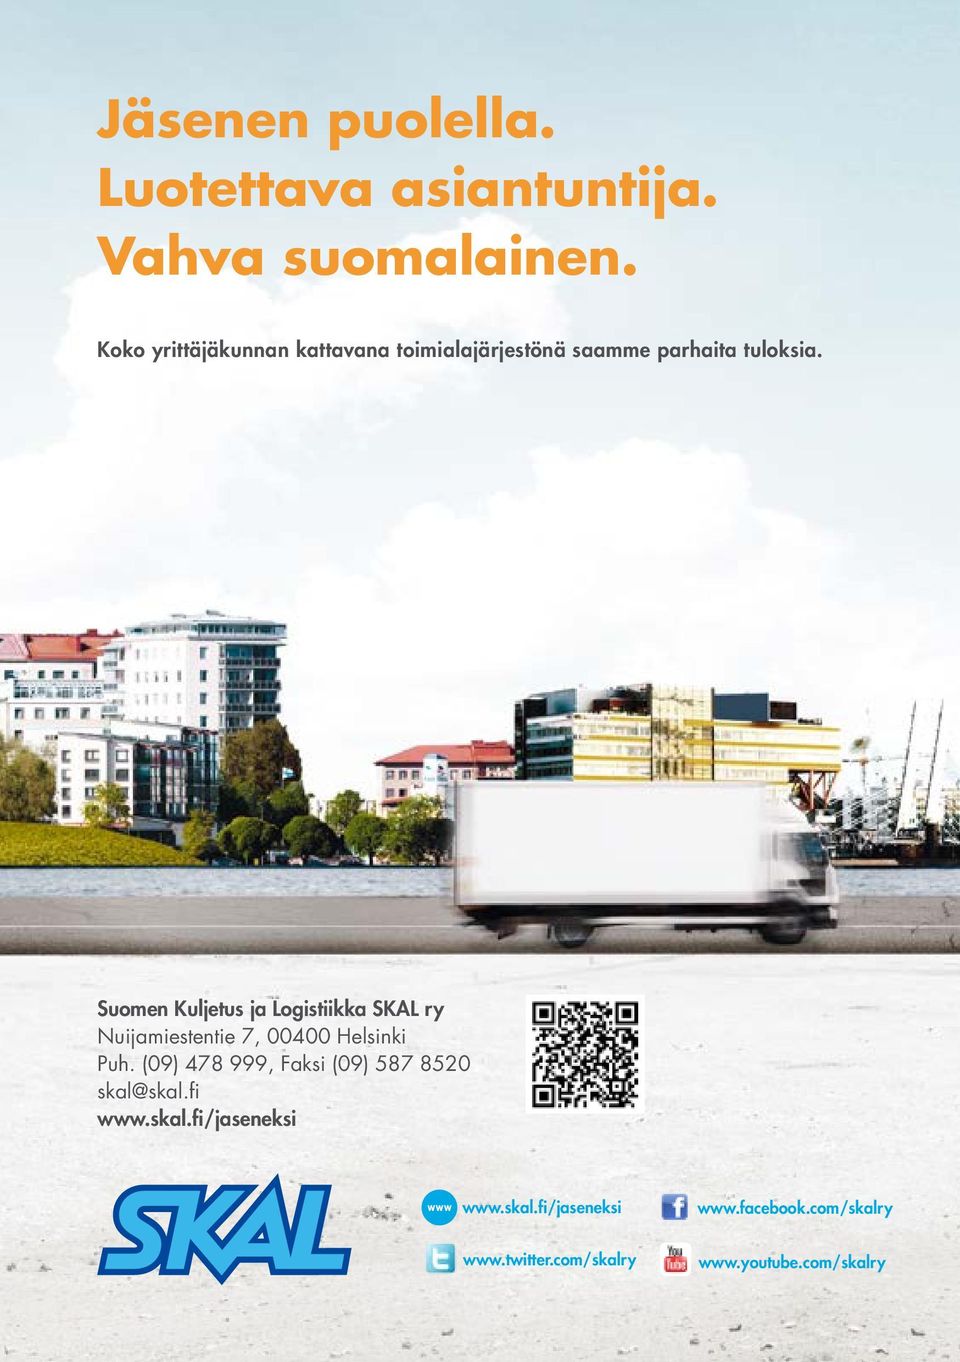 Suomen Kuljetus ja Logistiikka SKAL ry Nuijamiestentie 7, 00400 Helsinki Puh.